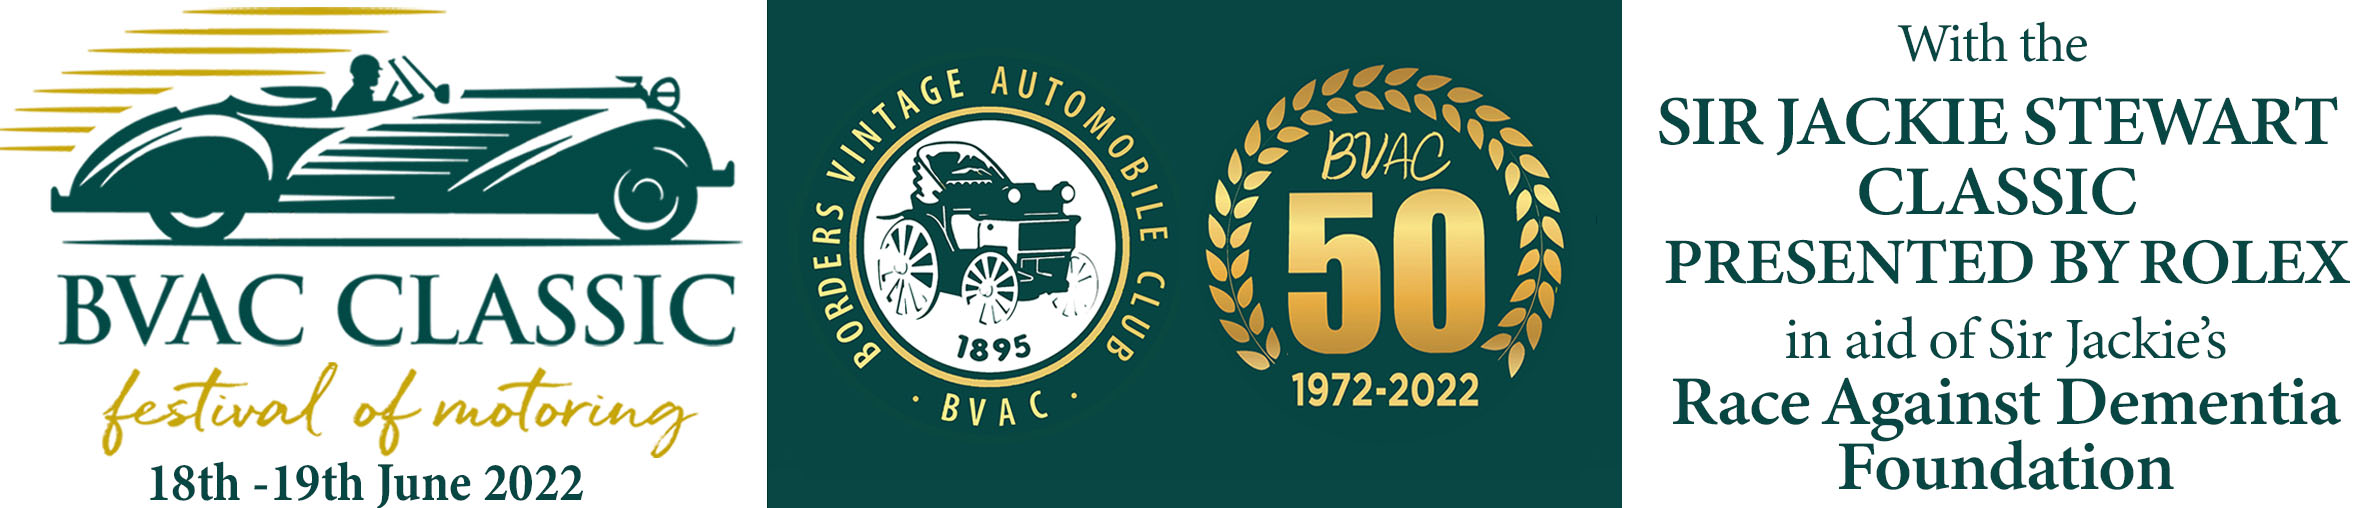 BVAC Classic - Festival of Motoring